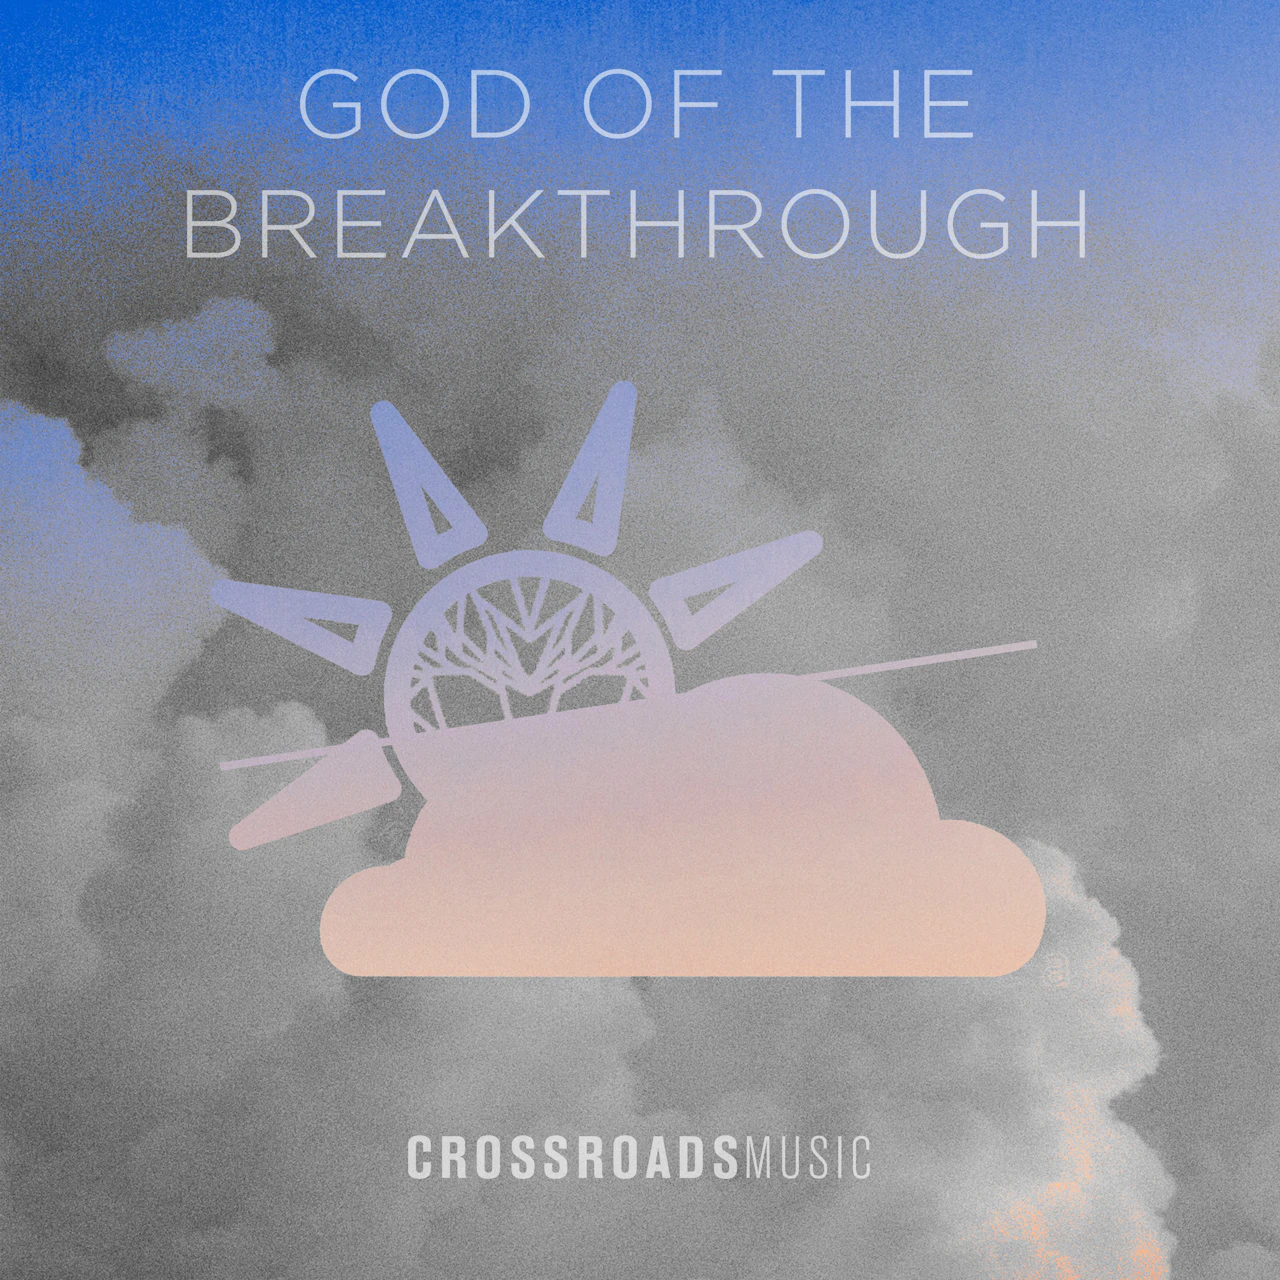 God of the breakthrough live